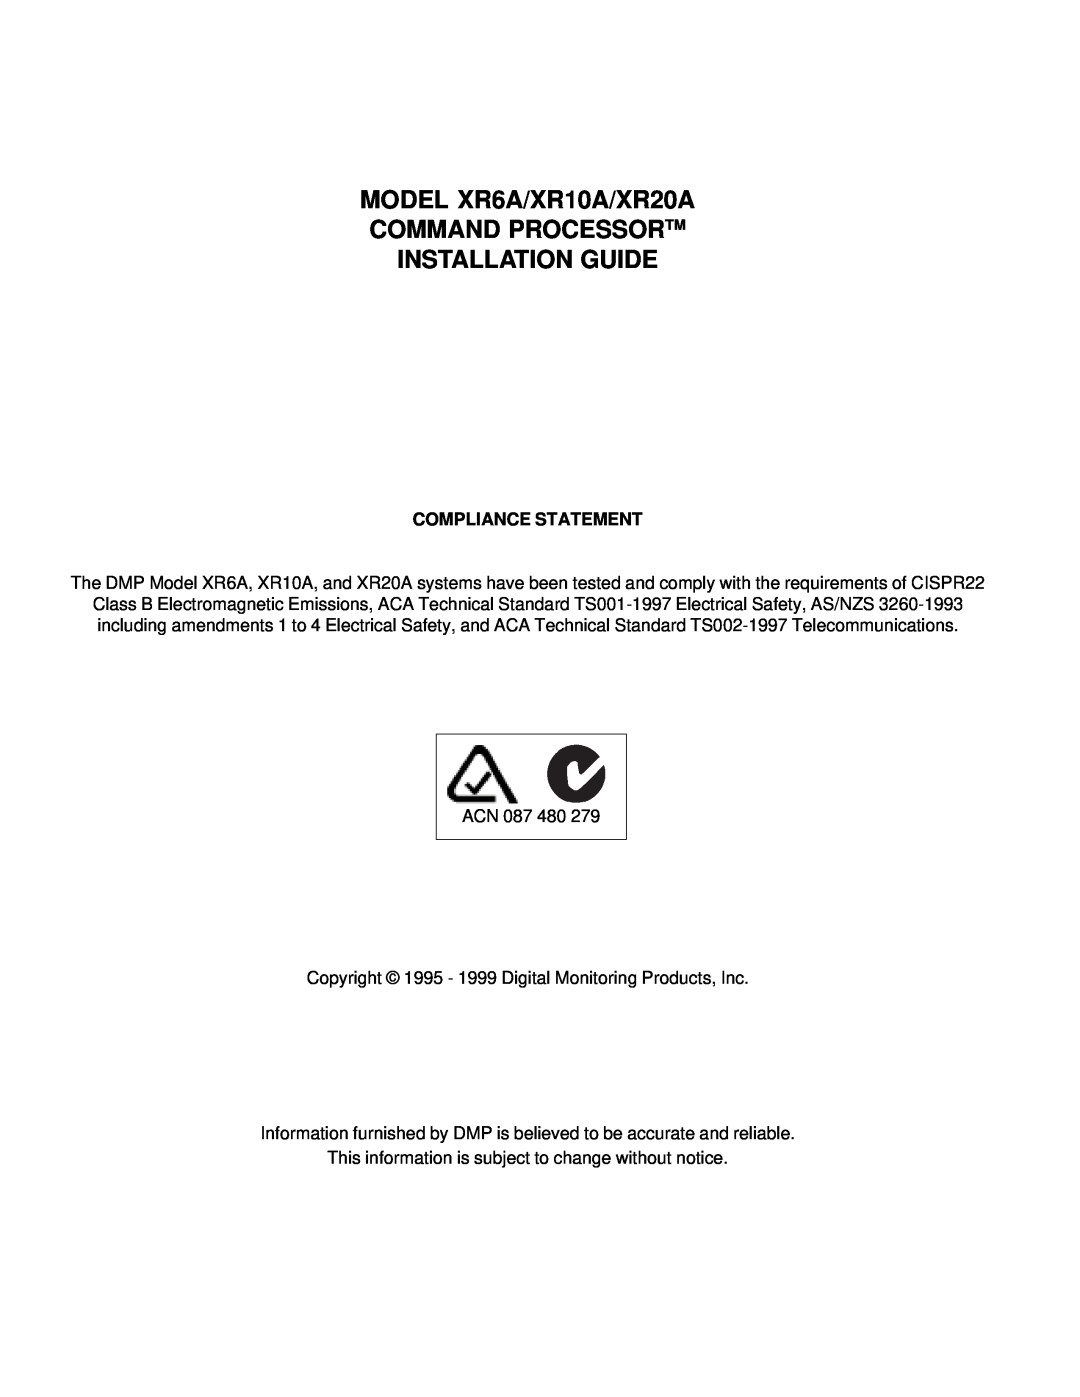 DMP Electronics manual Compliance Statement, MODEL XR6A/XR10A/XR20A COMMAND PROCESSORTM, Installation Guide 